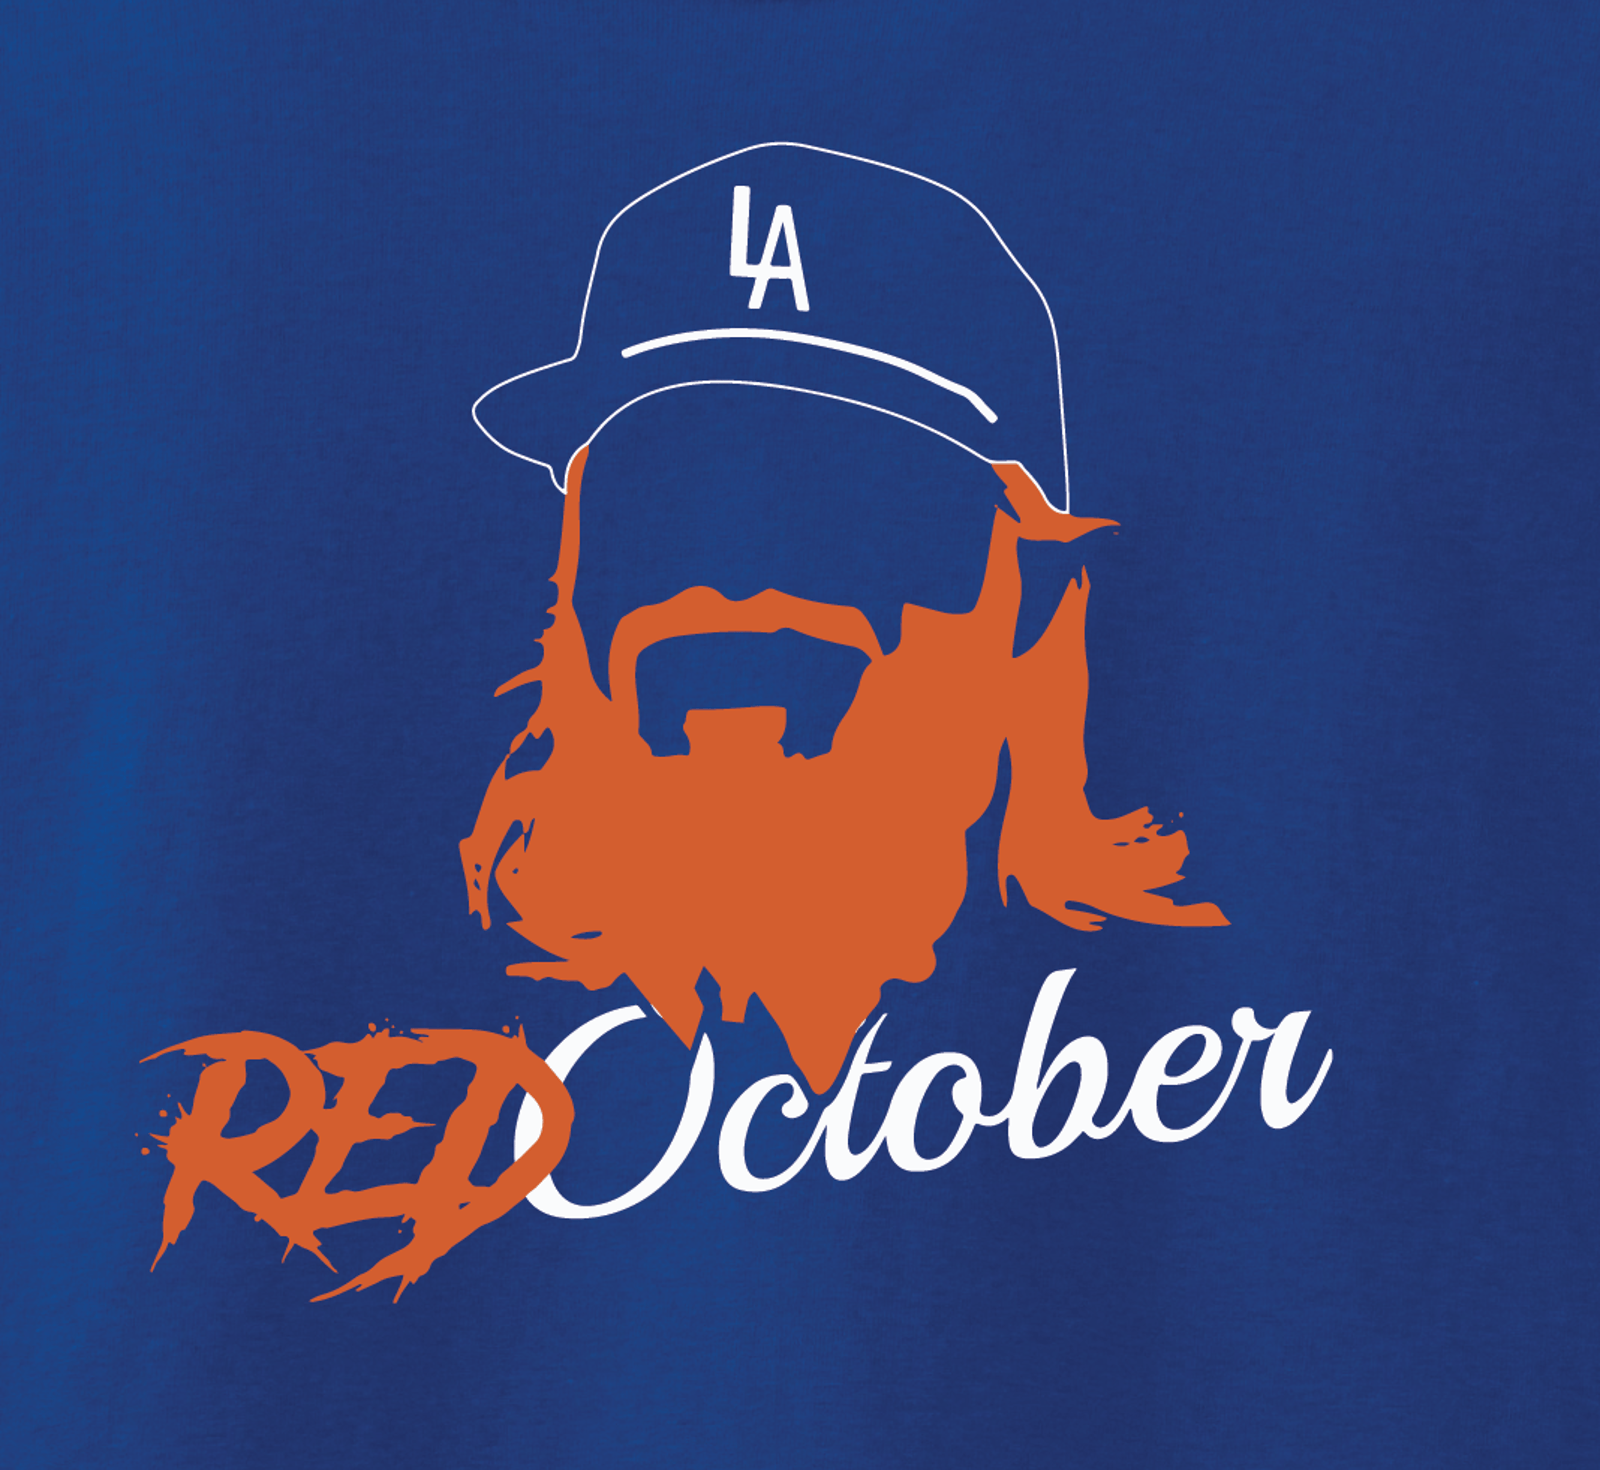 Red October Logo - Red October